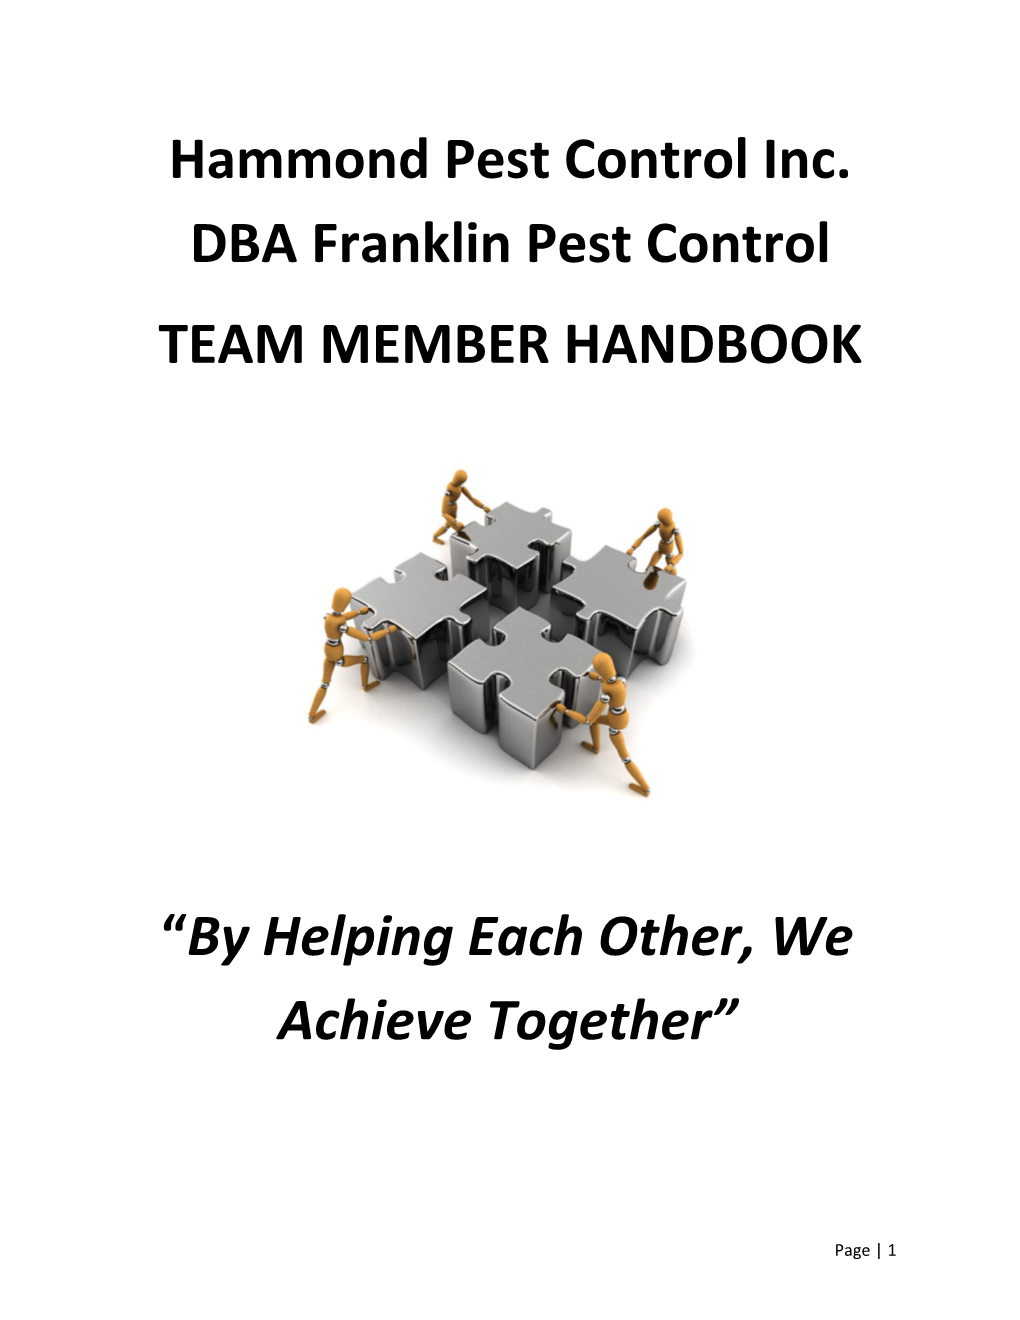 Hammond Pest Control Inc. DBA Franklin Pest Control